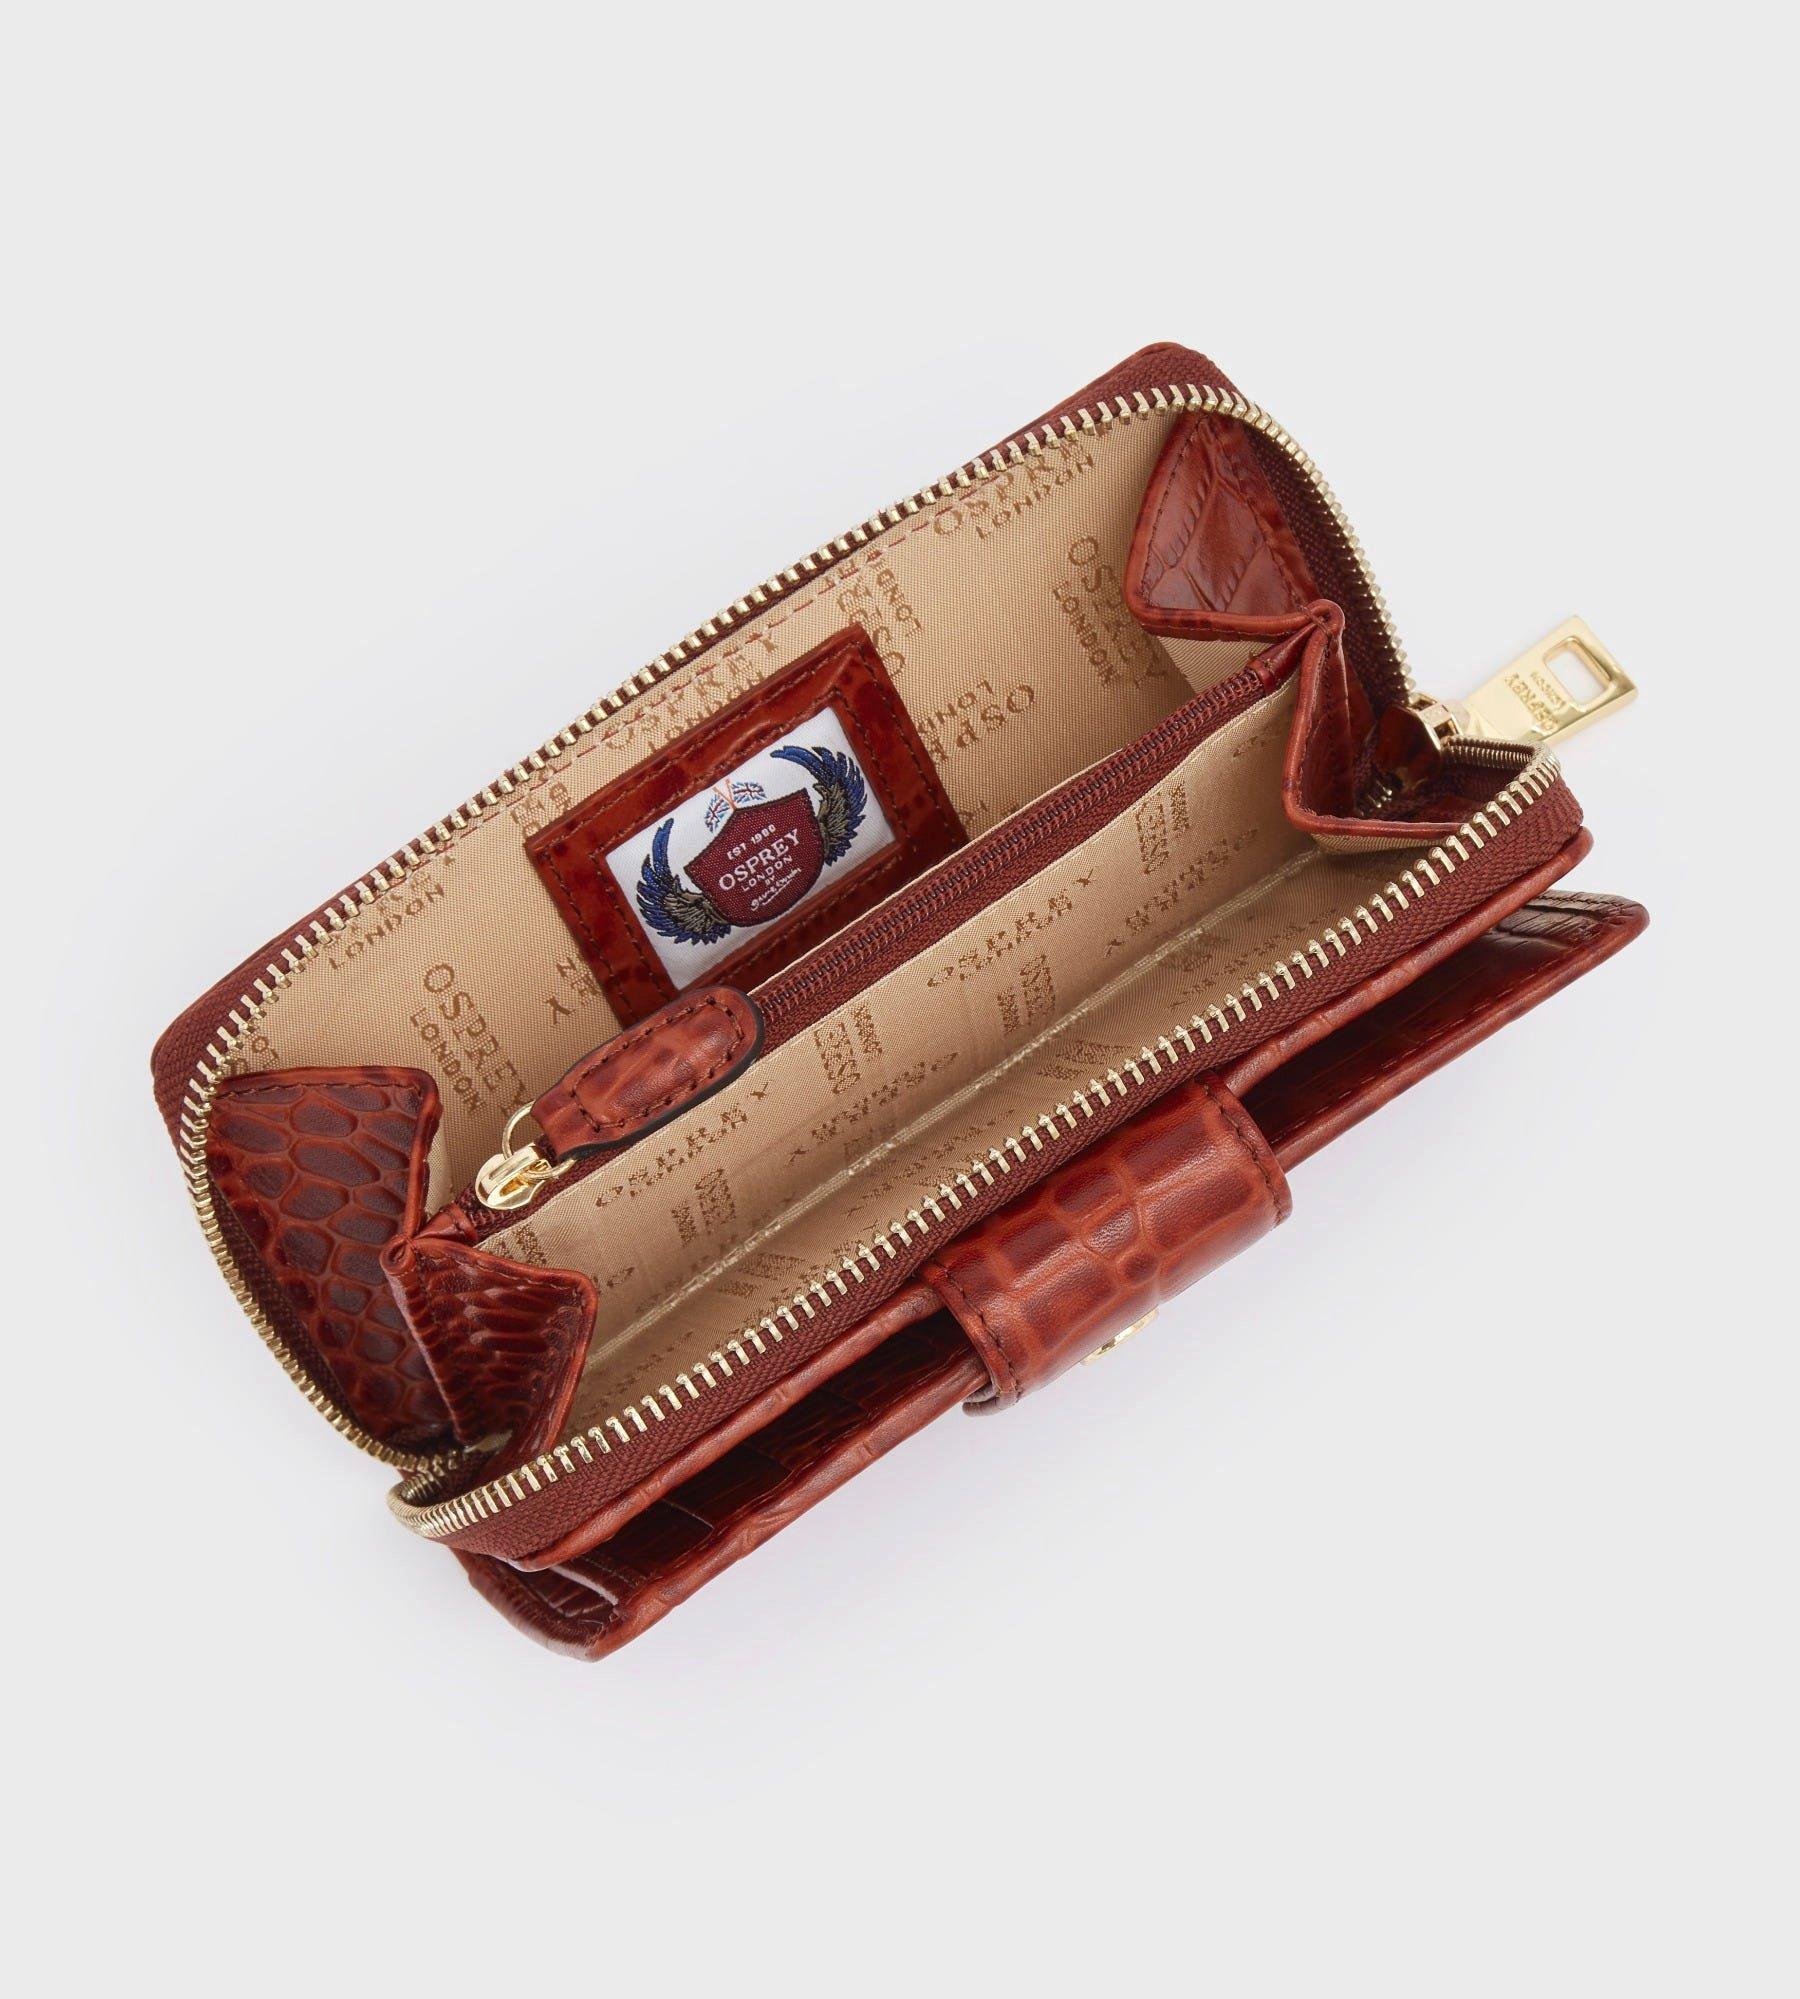 OSPREY leather purse and holder set new - Depop